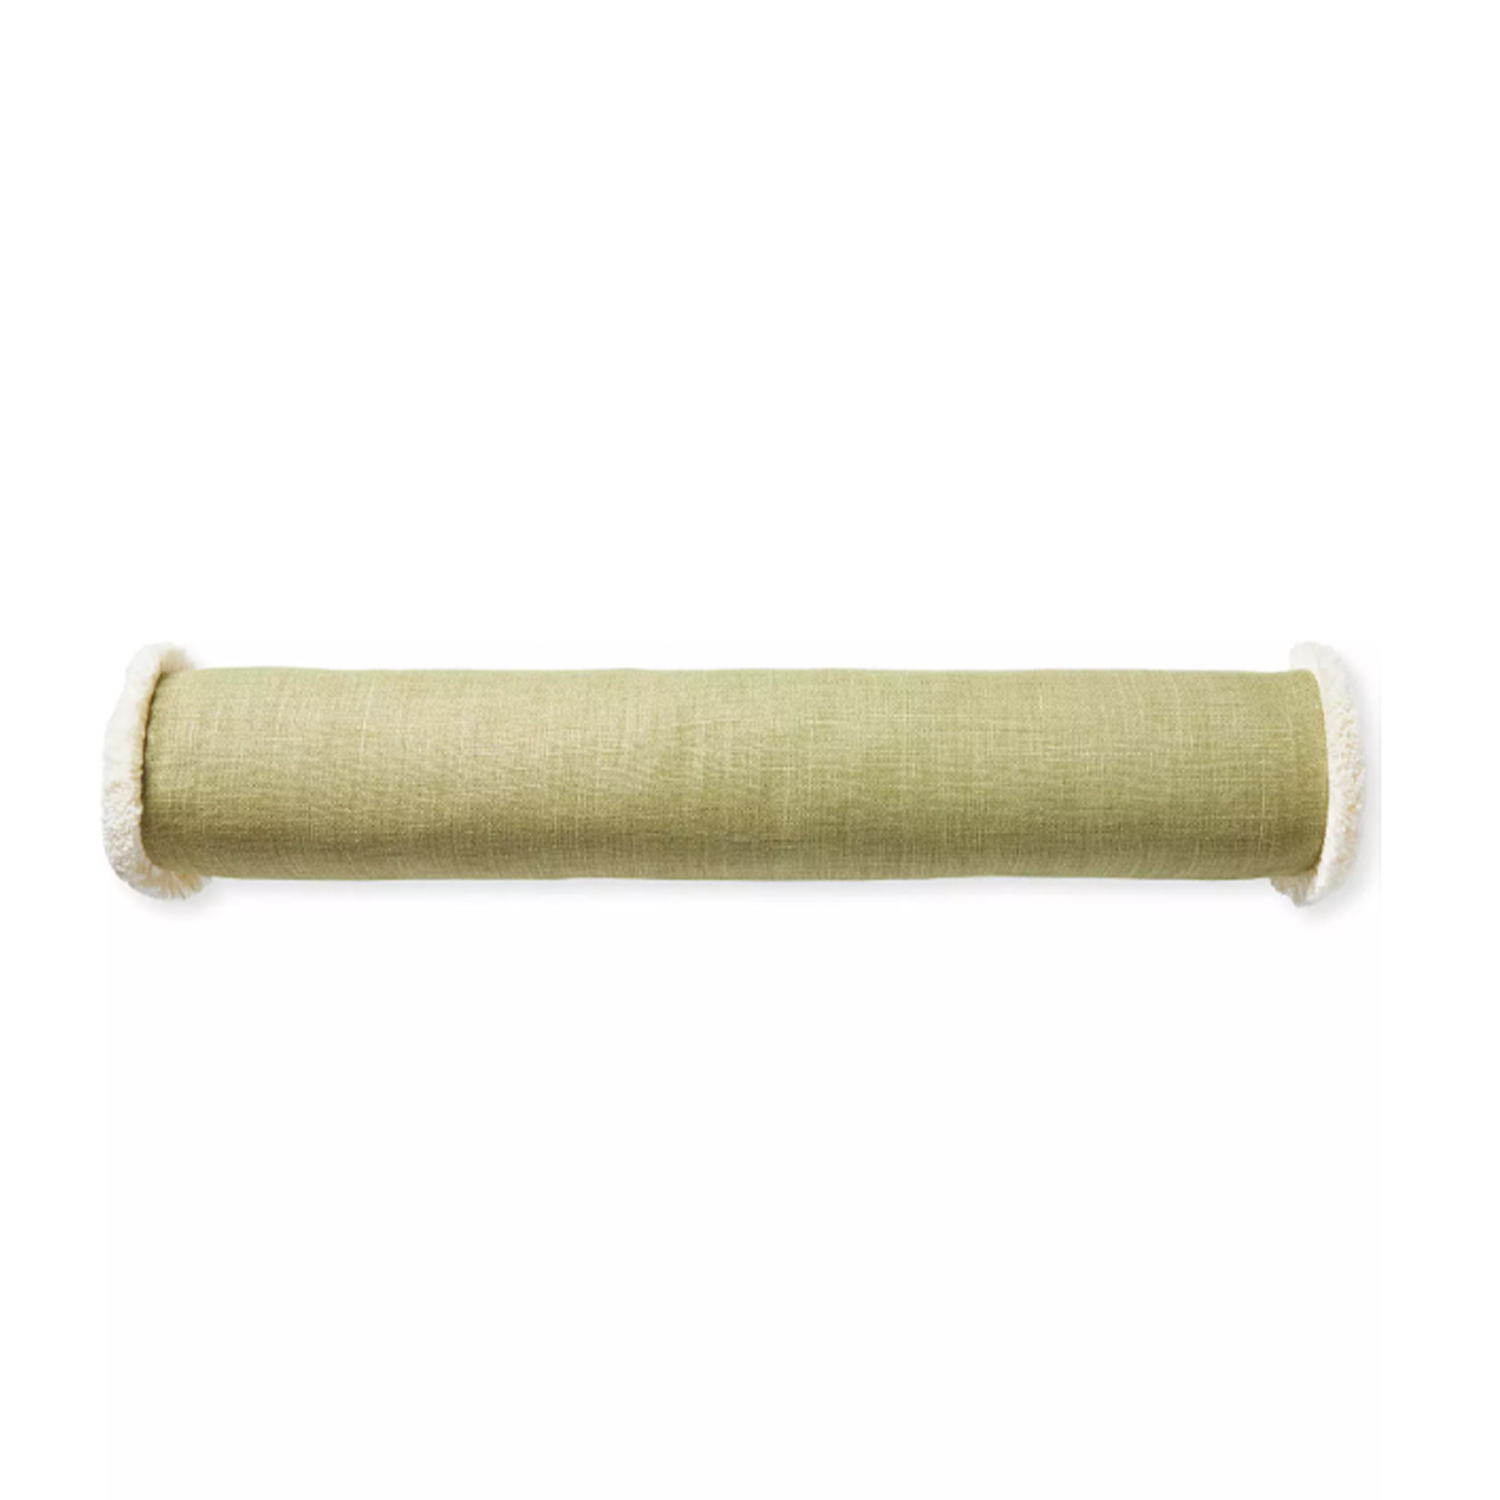 Bowden Pillow Cover in Fern Green